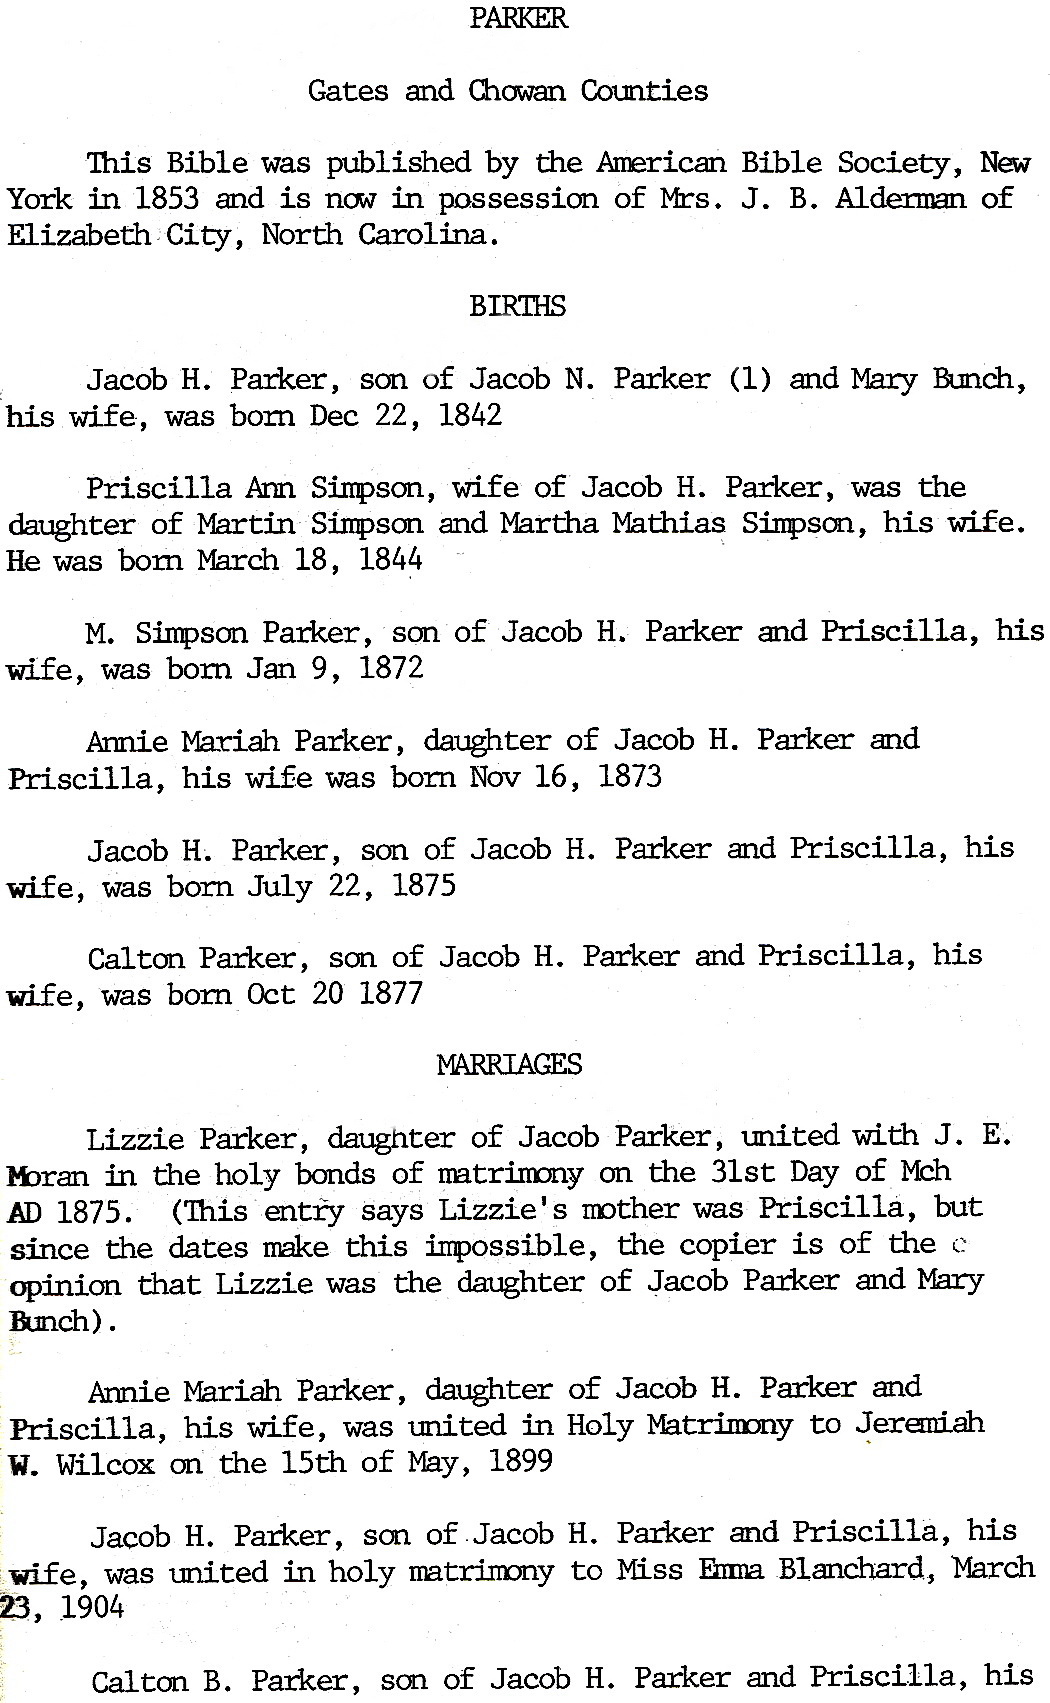 PARKER - JACOB - BIBLE RECORDS - YEAR BOOK VOL 4 - PASQ HIST SOCIETY_1